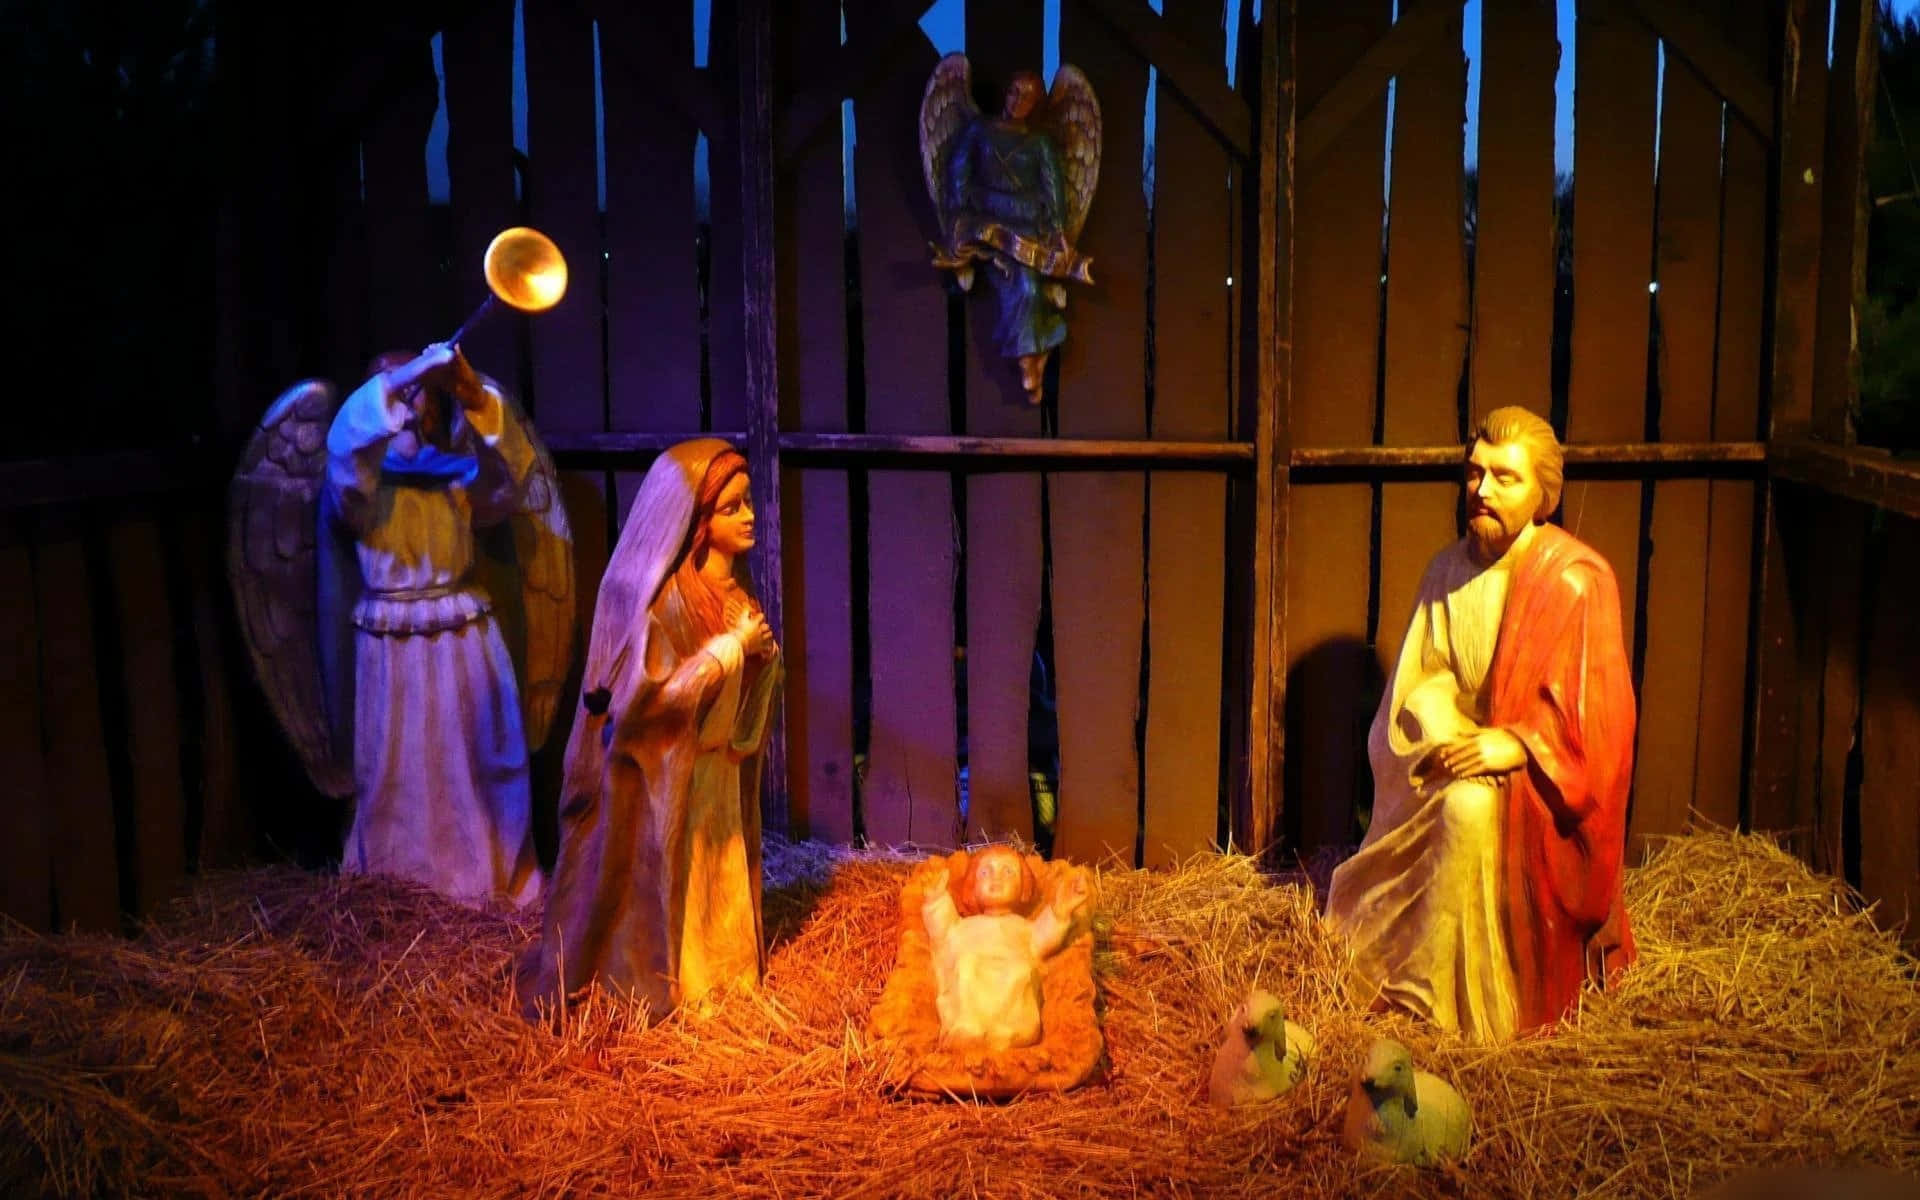 Baby Jesus in his manger